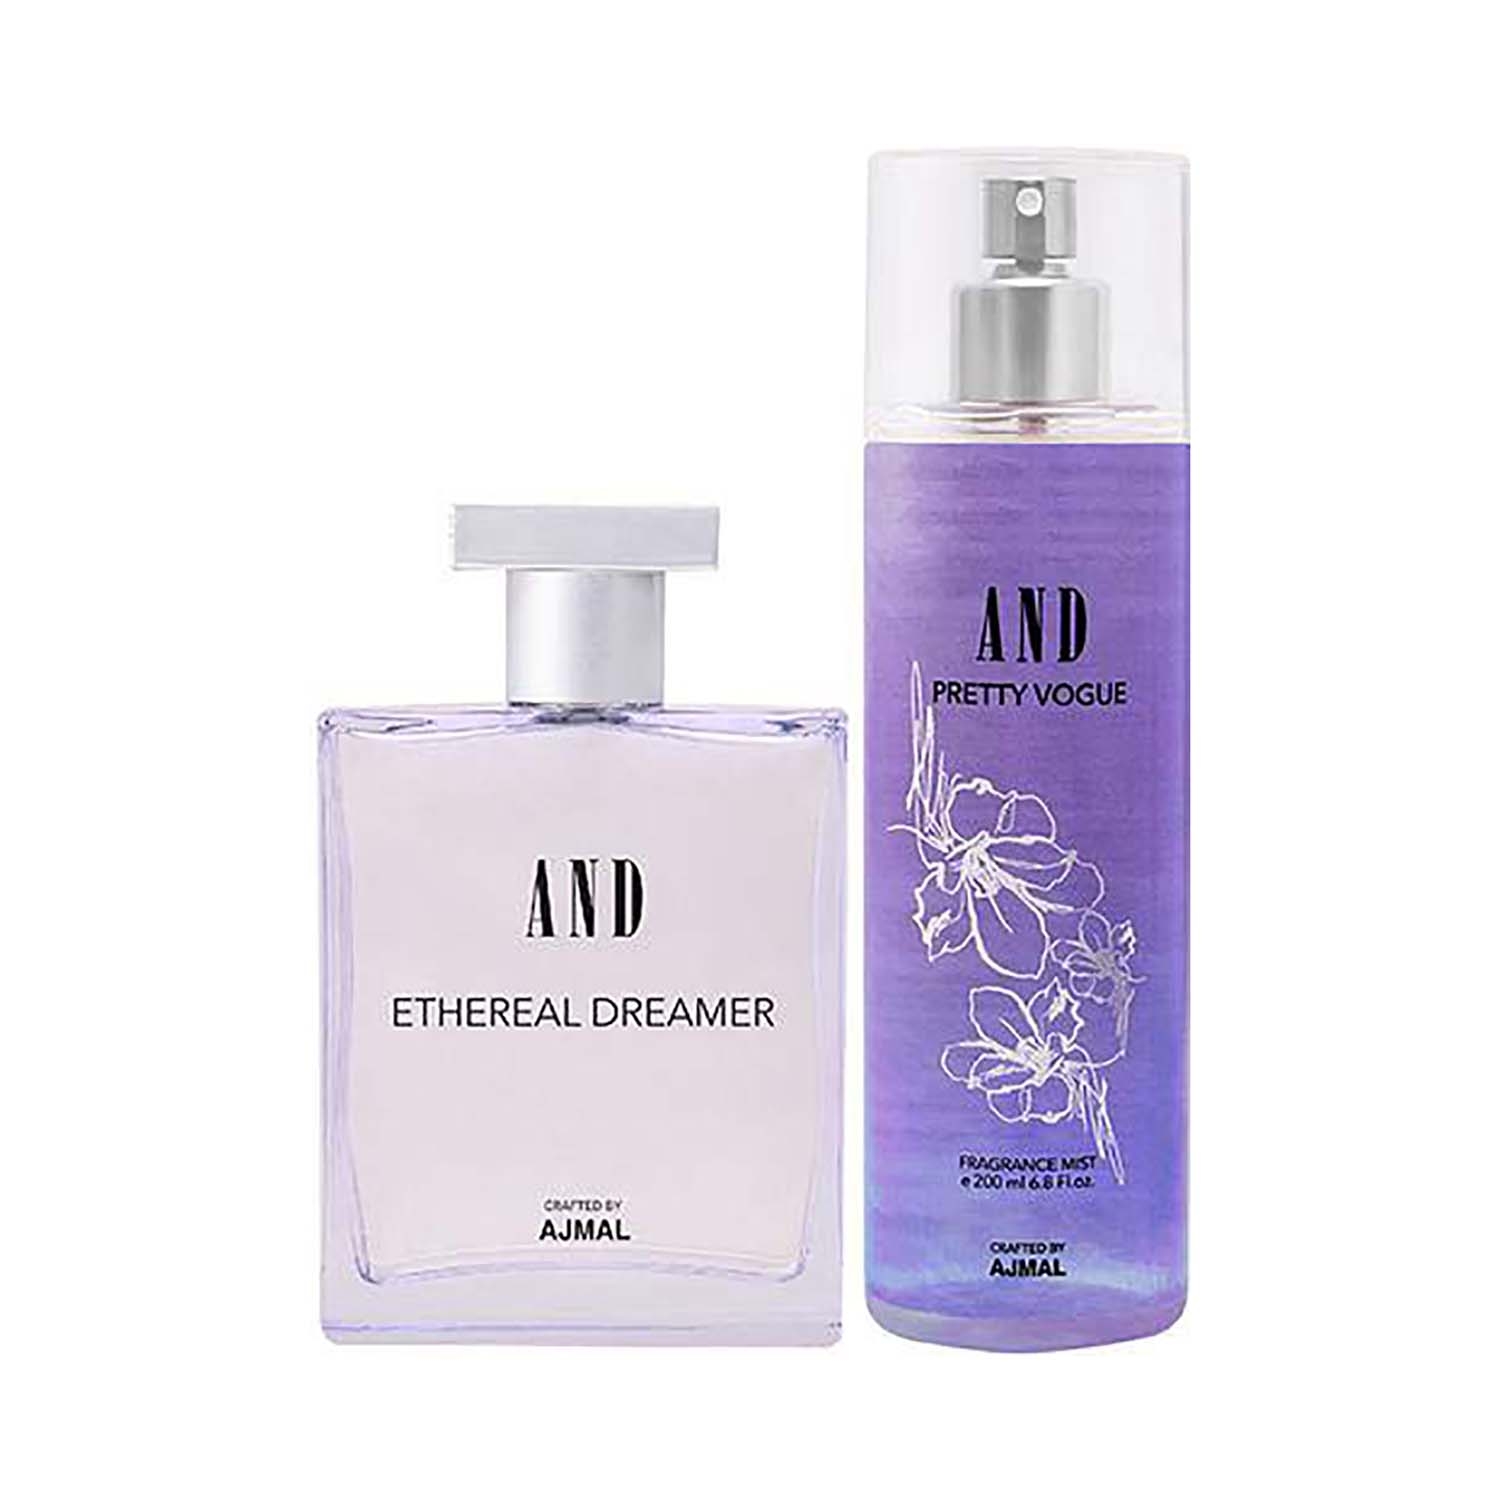 AND Ethereal Dreamer Eau De Parfum & Pretty Vogue Body Mist (300 ml) - (Pack Of 2)